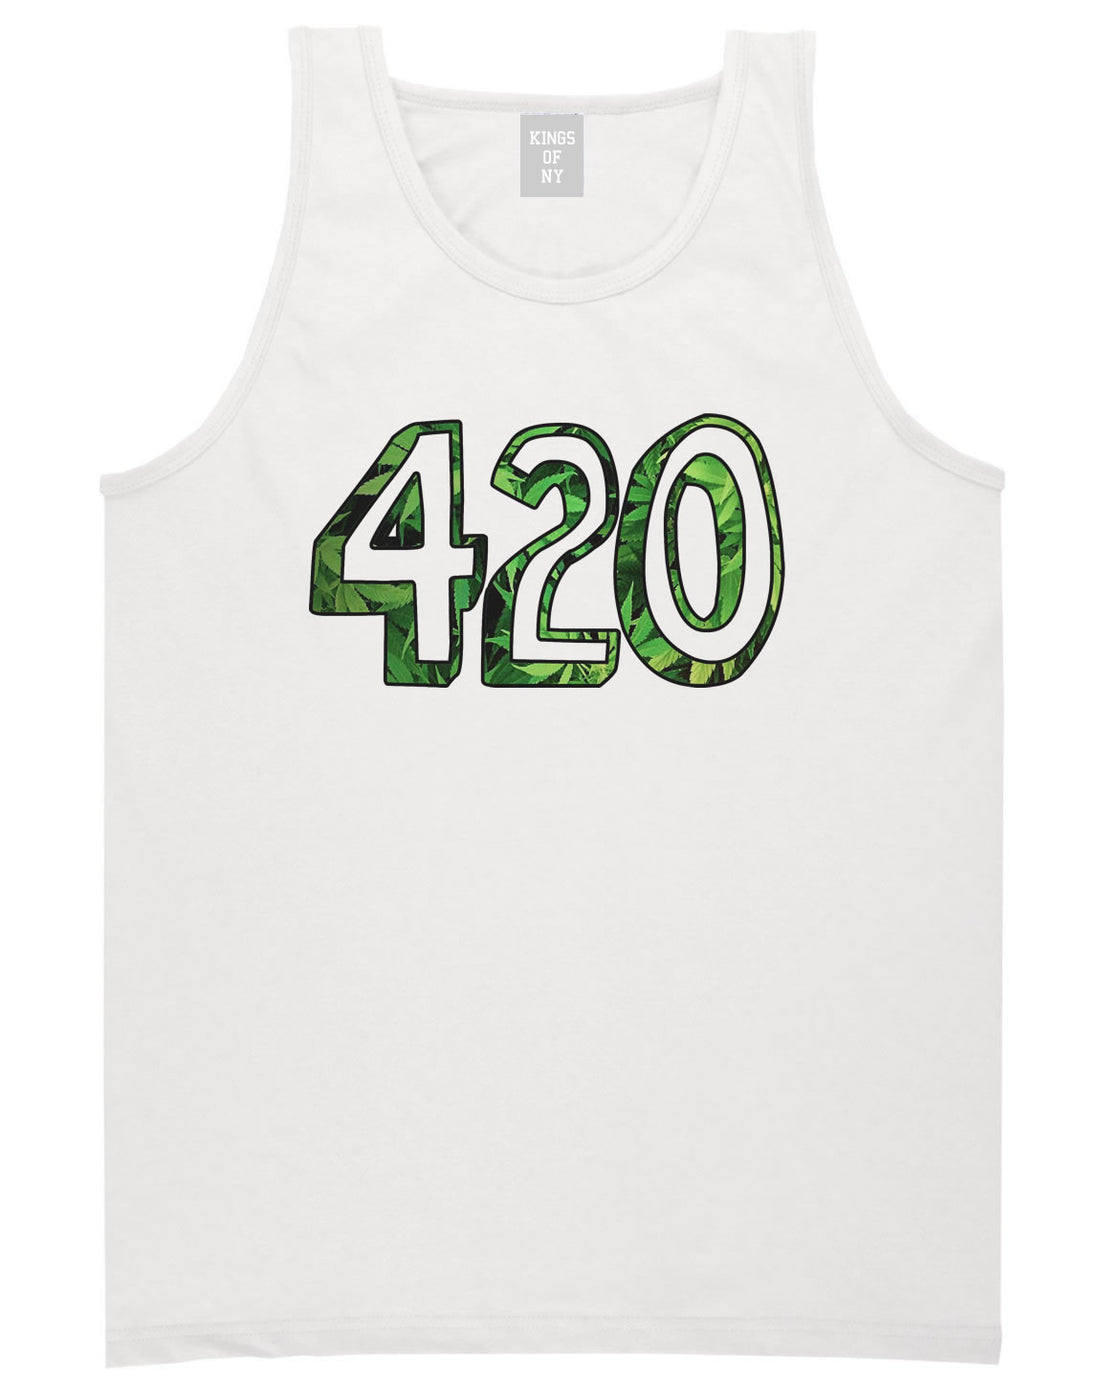  420 Weed Marijuana Print Tank Top in White by Kings Of NY